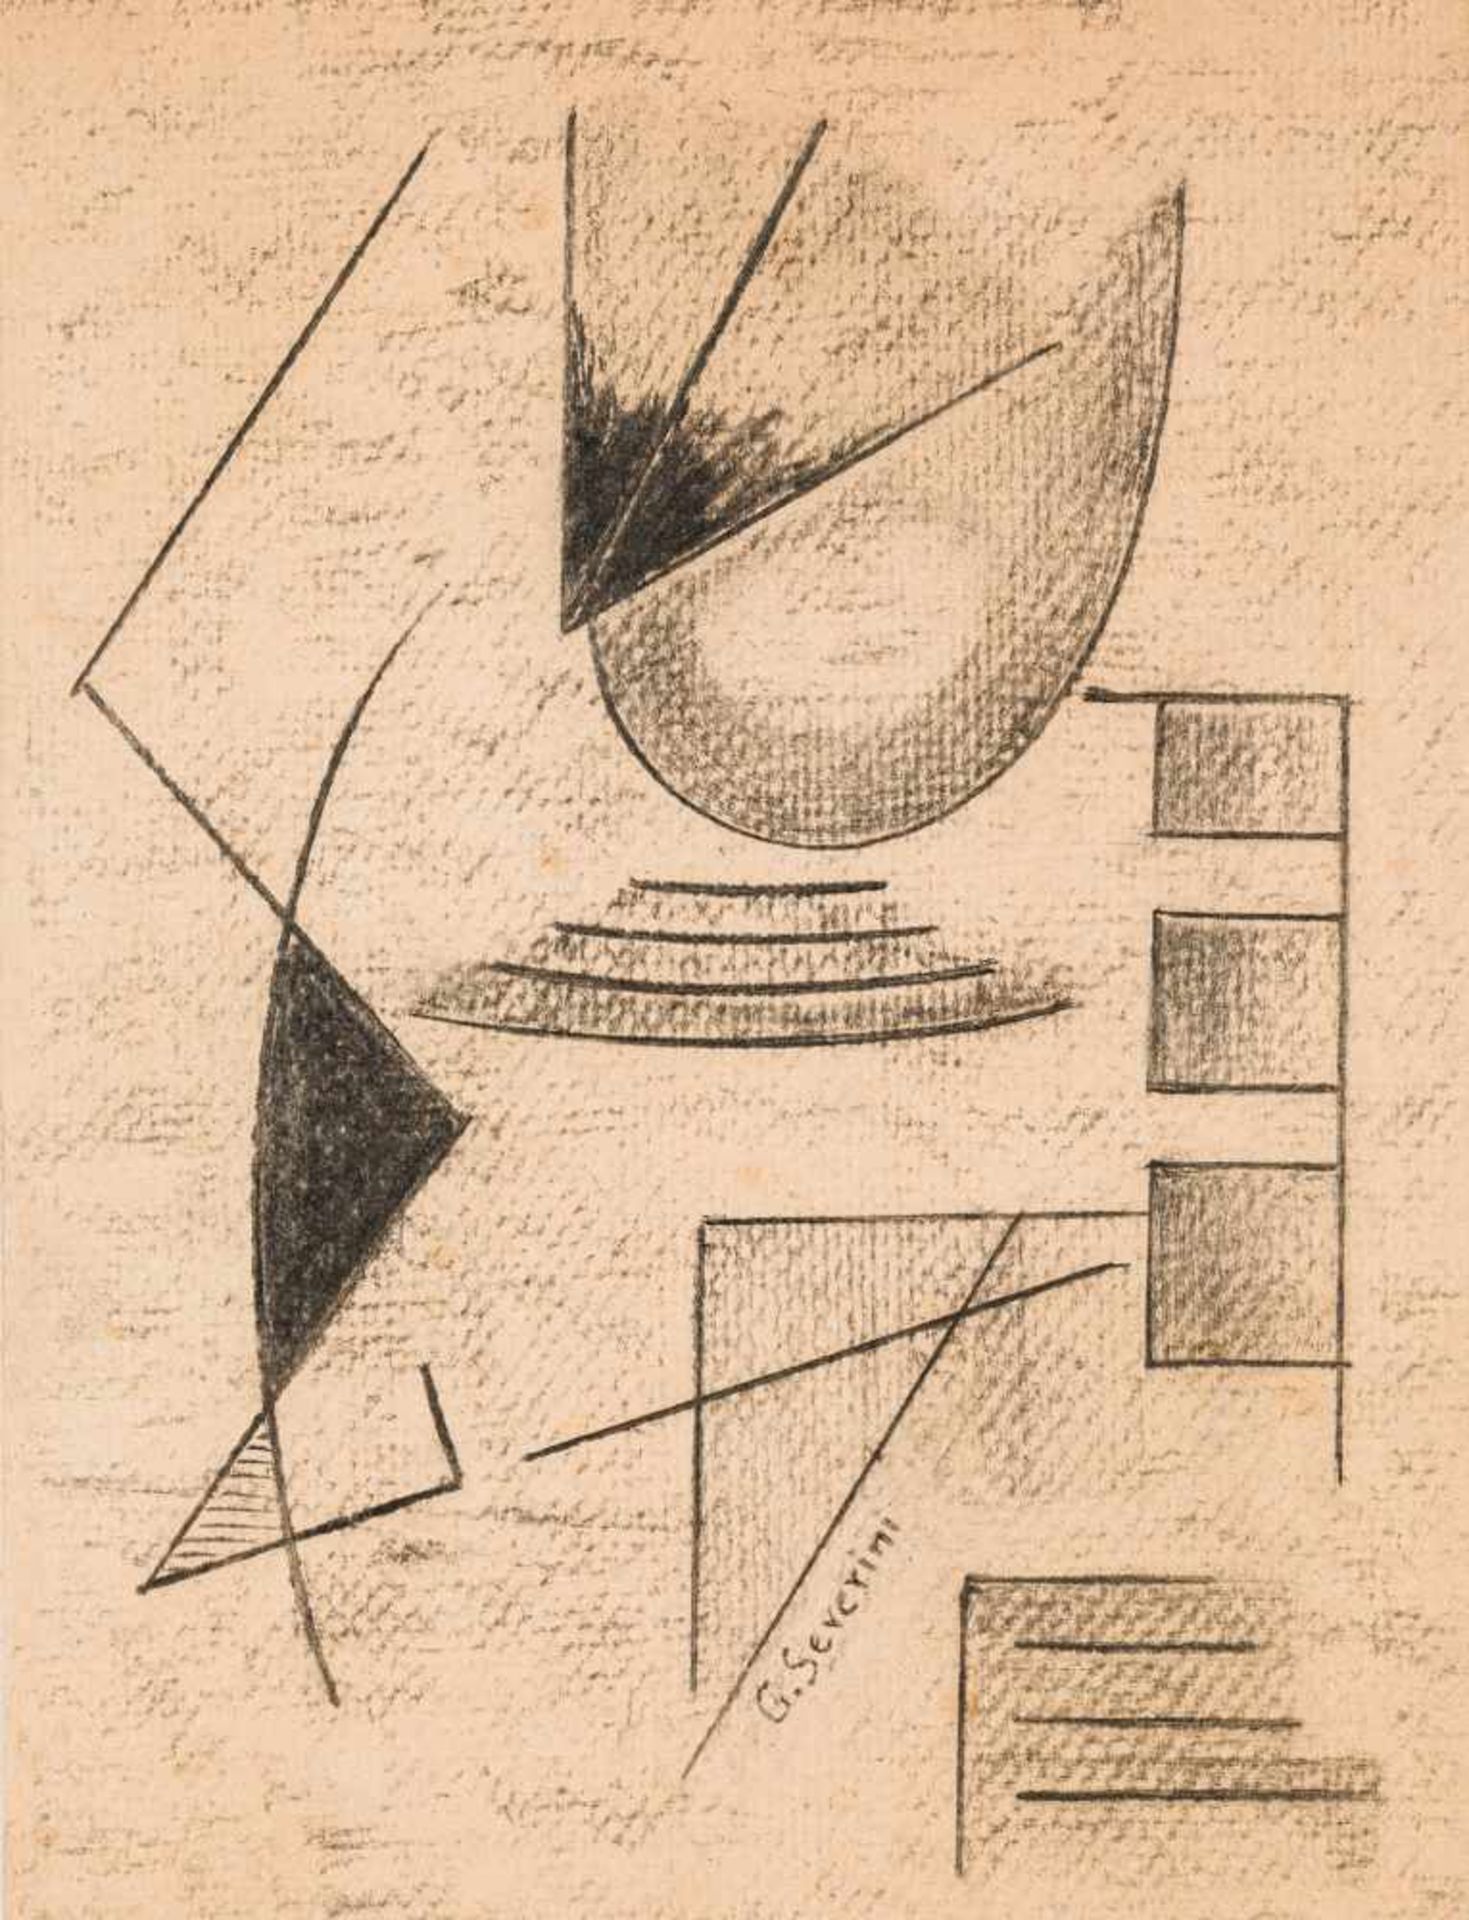 Gino SeveriniCortona 1883 - 1966 ParisKompositionBleistift auf Karton / pencil on cardboard24 x 18,2